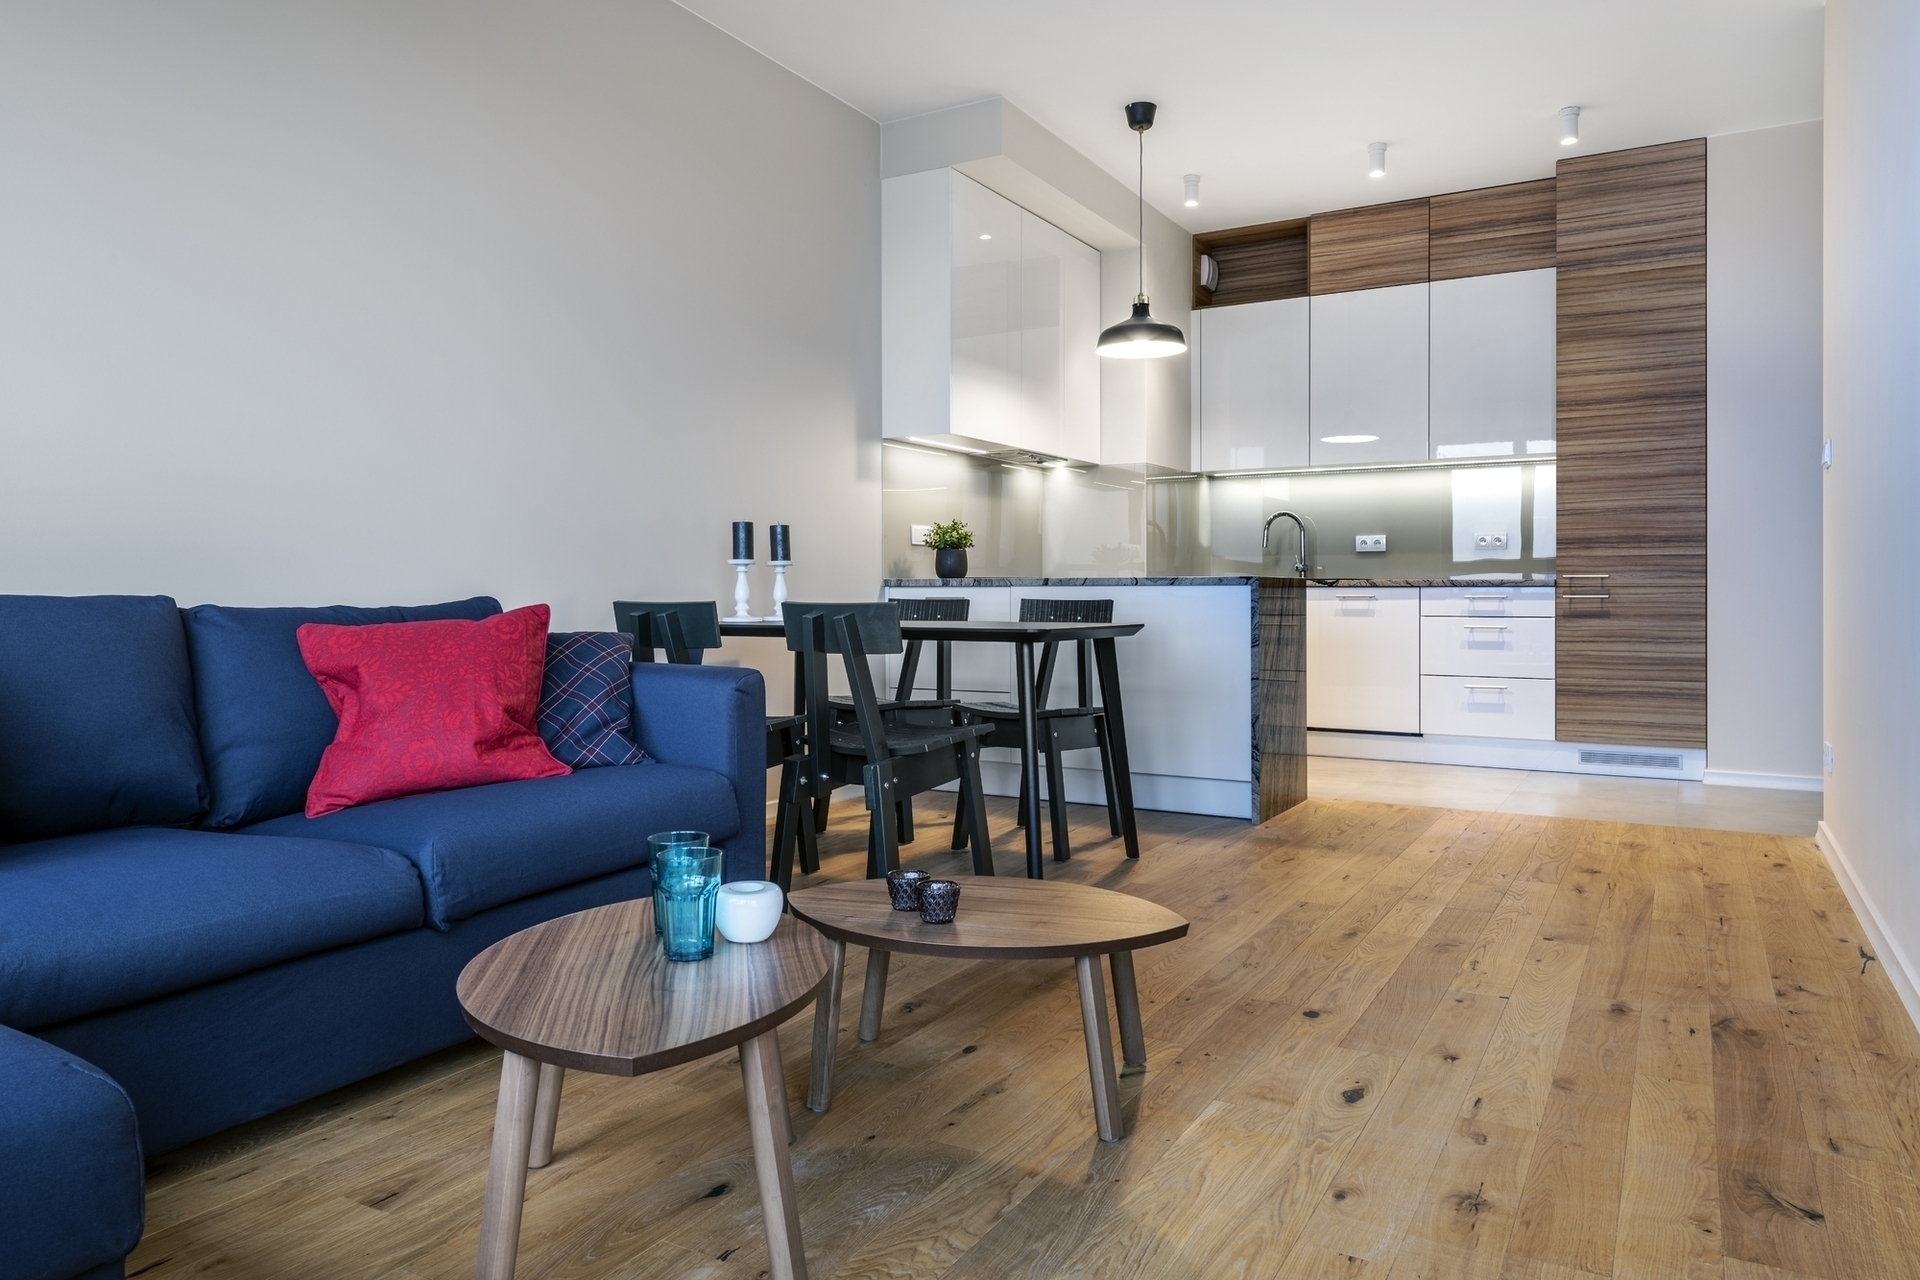 Modern living room and kitchen interior design